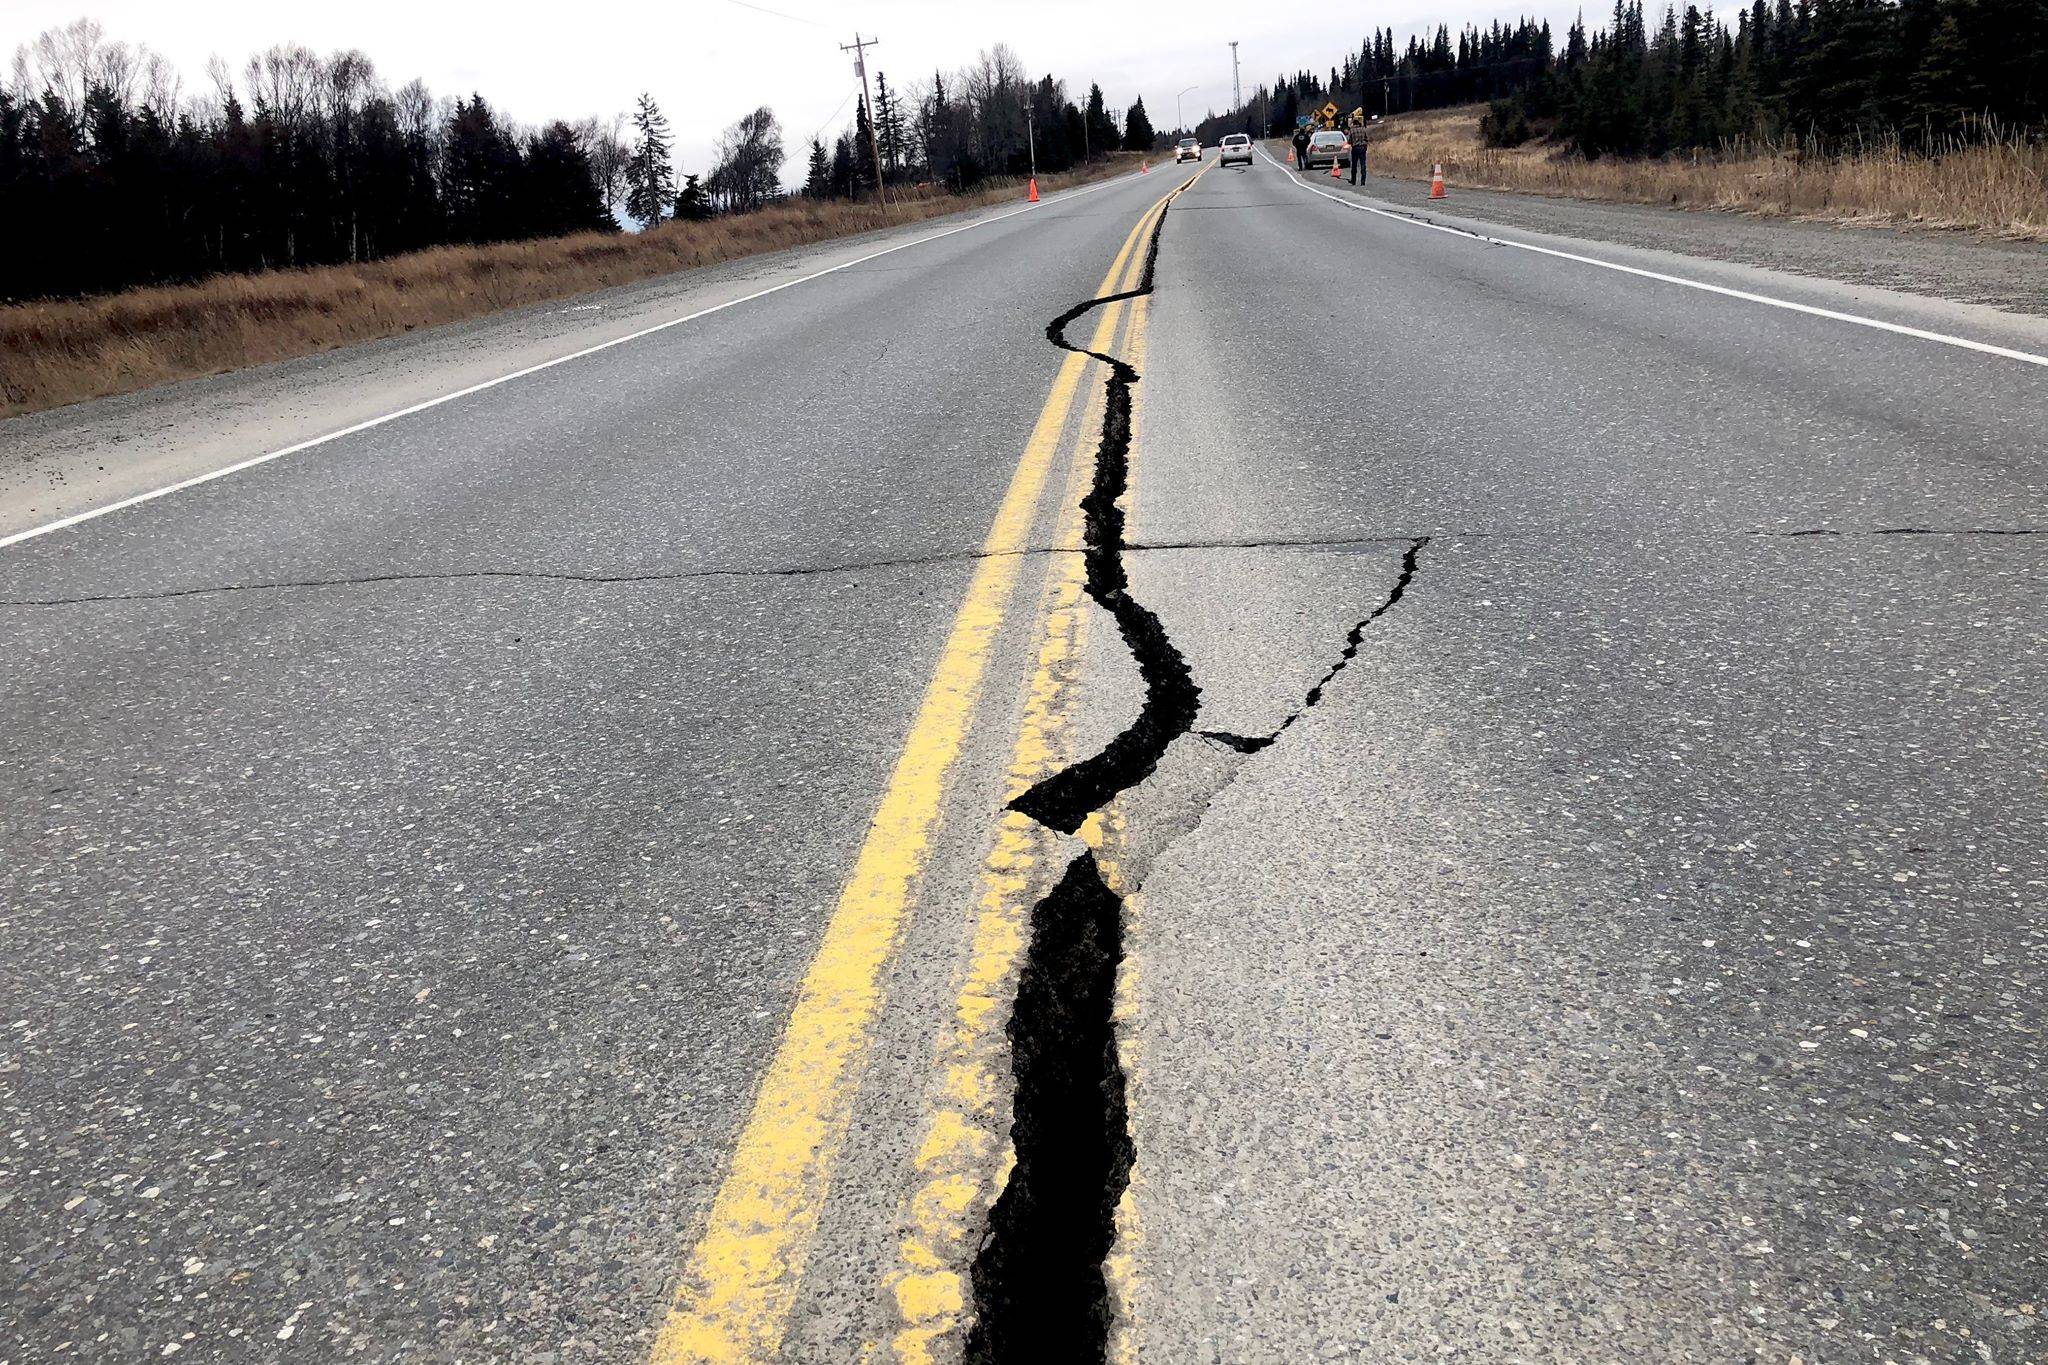 7.0 magnitude earthquake rocks buildings in Kenai and Anchorage